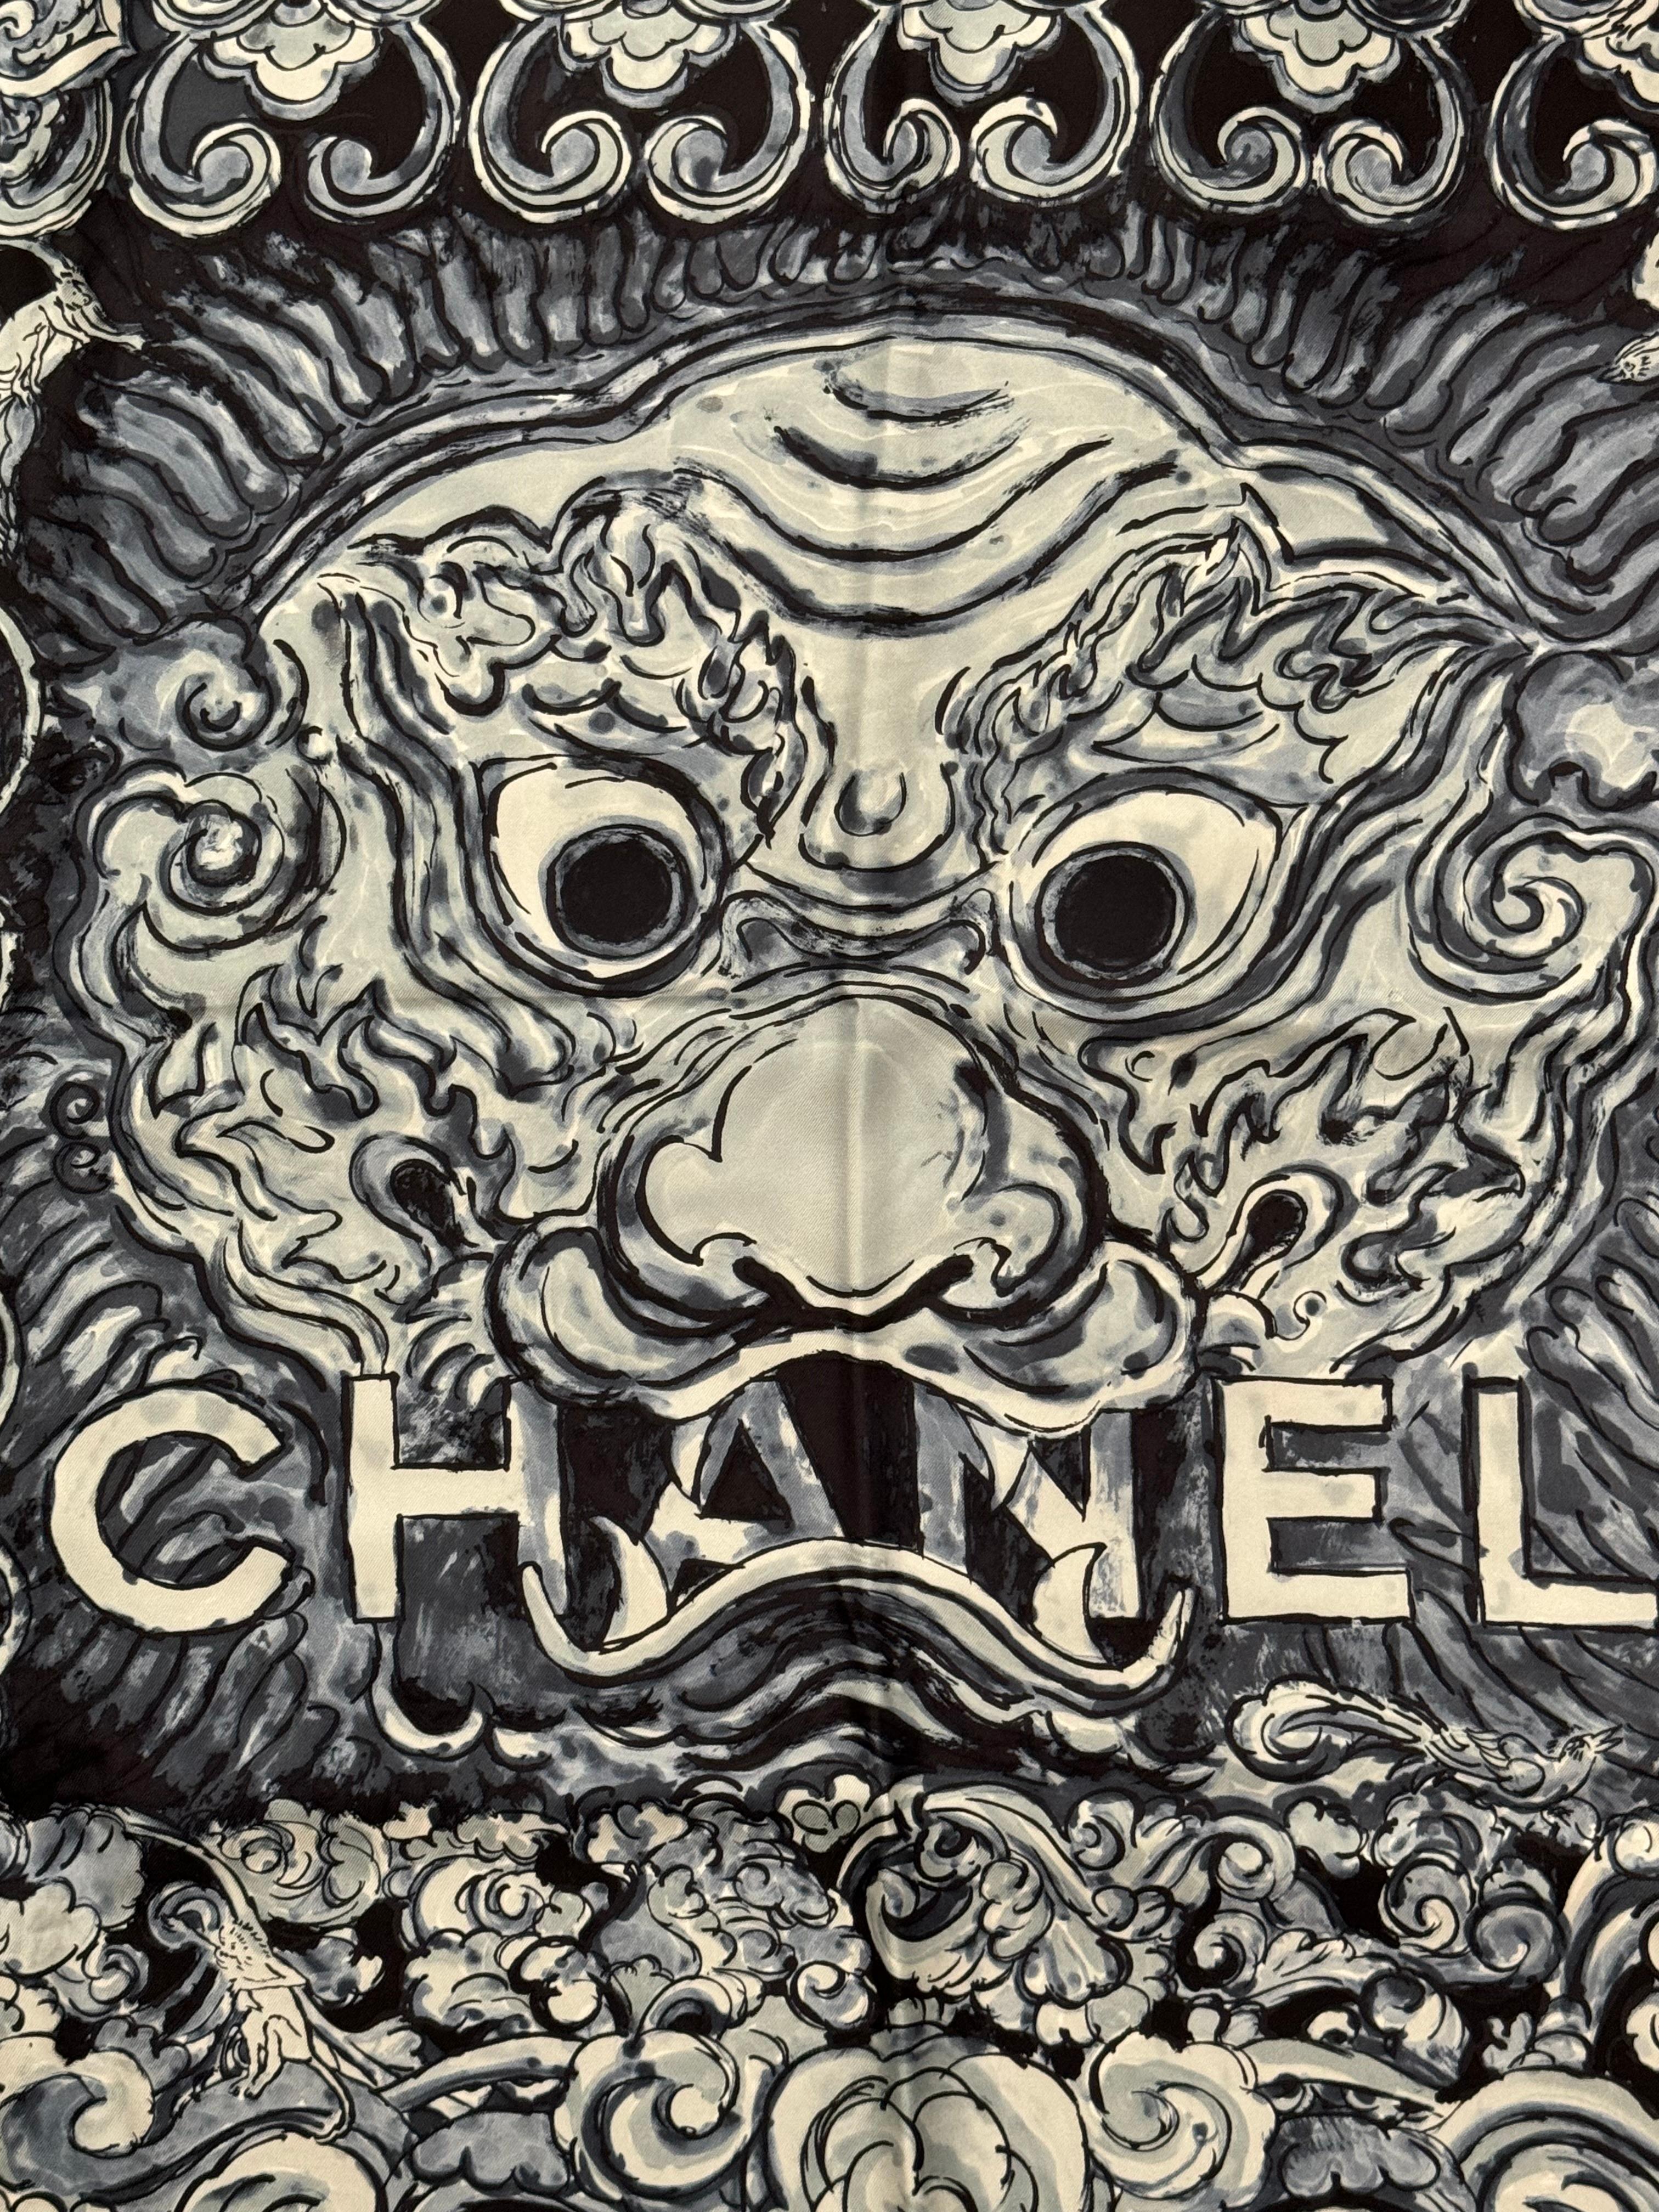 Rare Chanel métiers d’art Paris Shanghai pre fall 2010 silk scarf with original box, excellent condition 